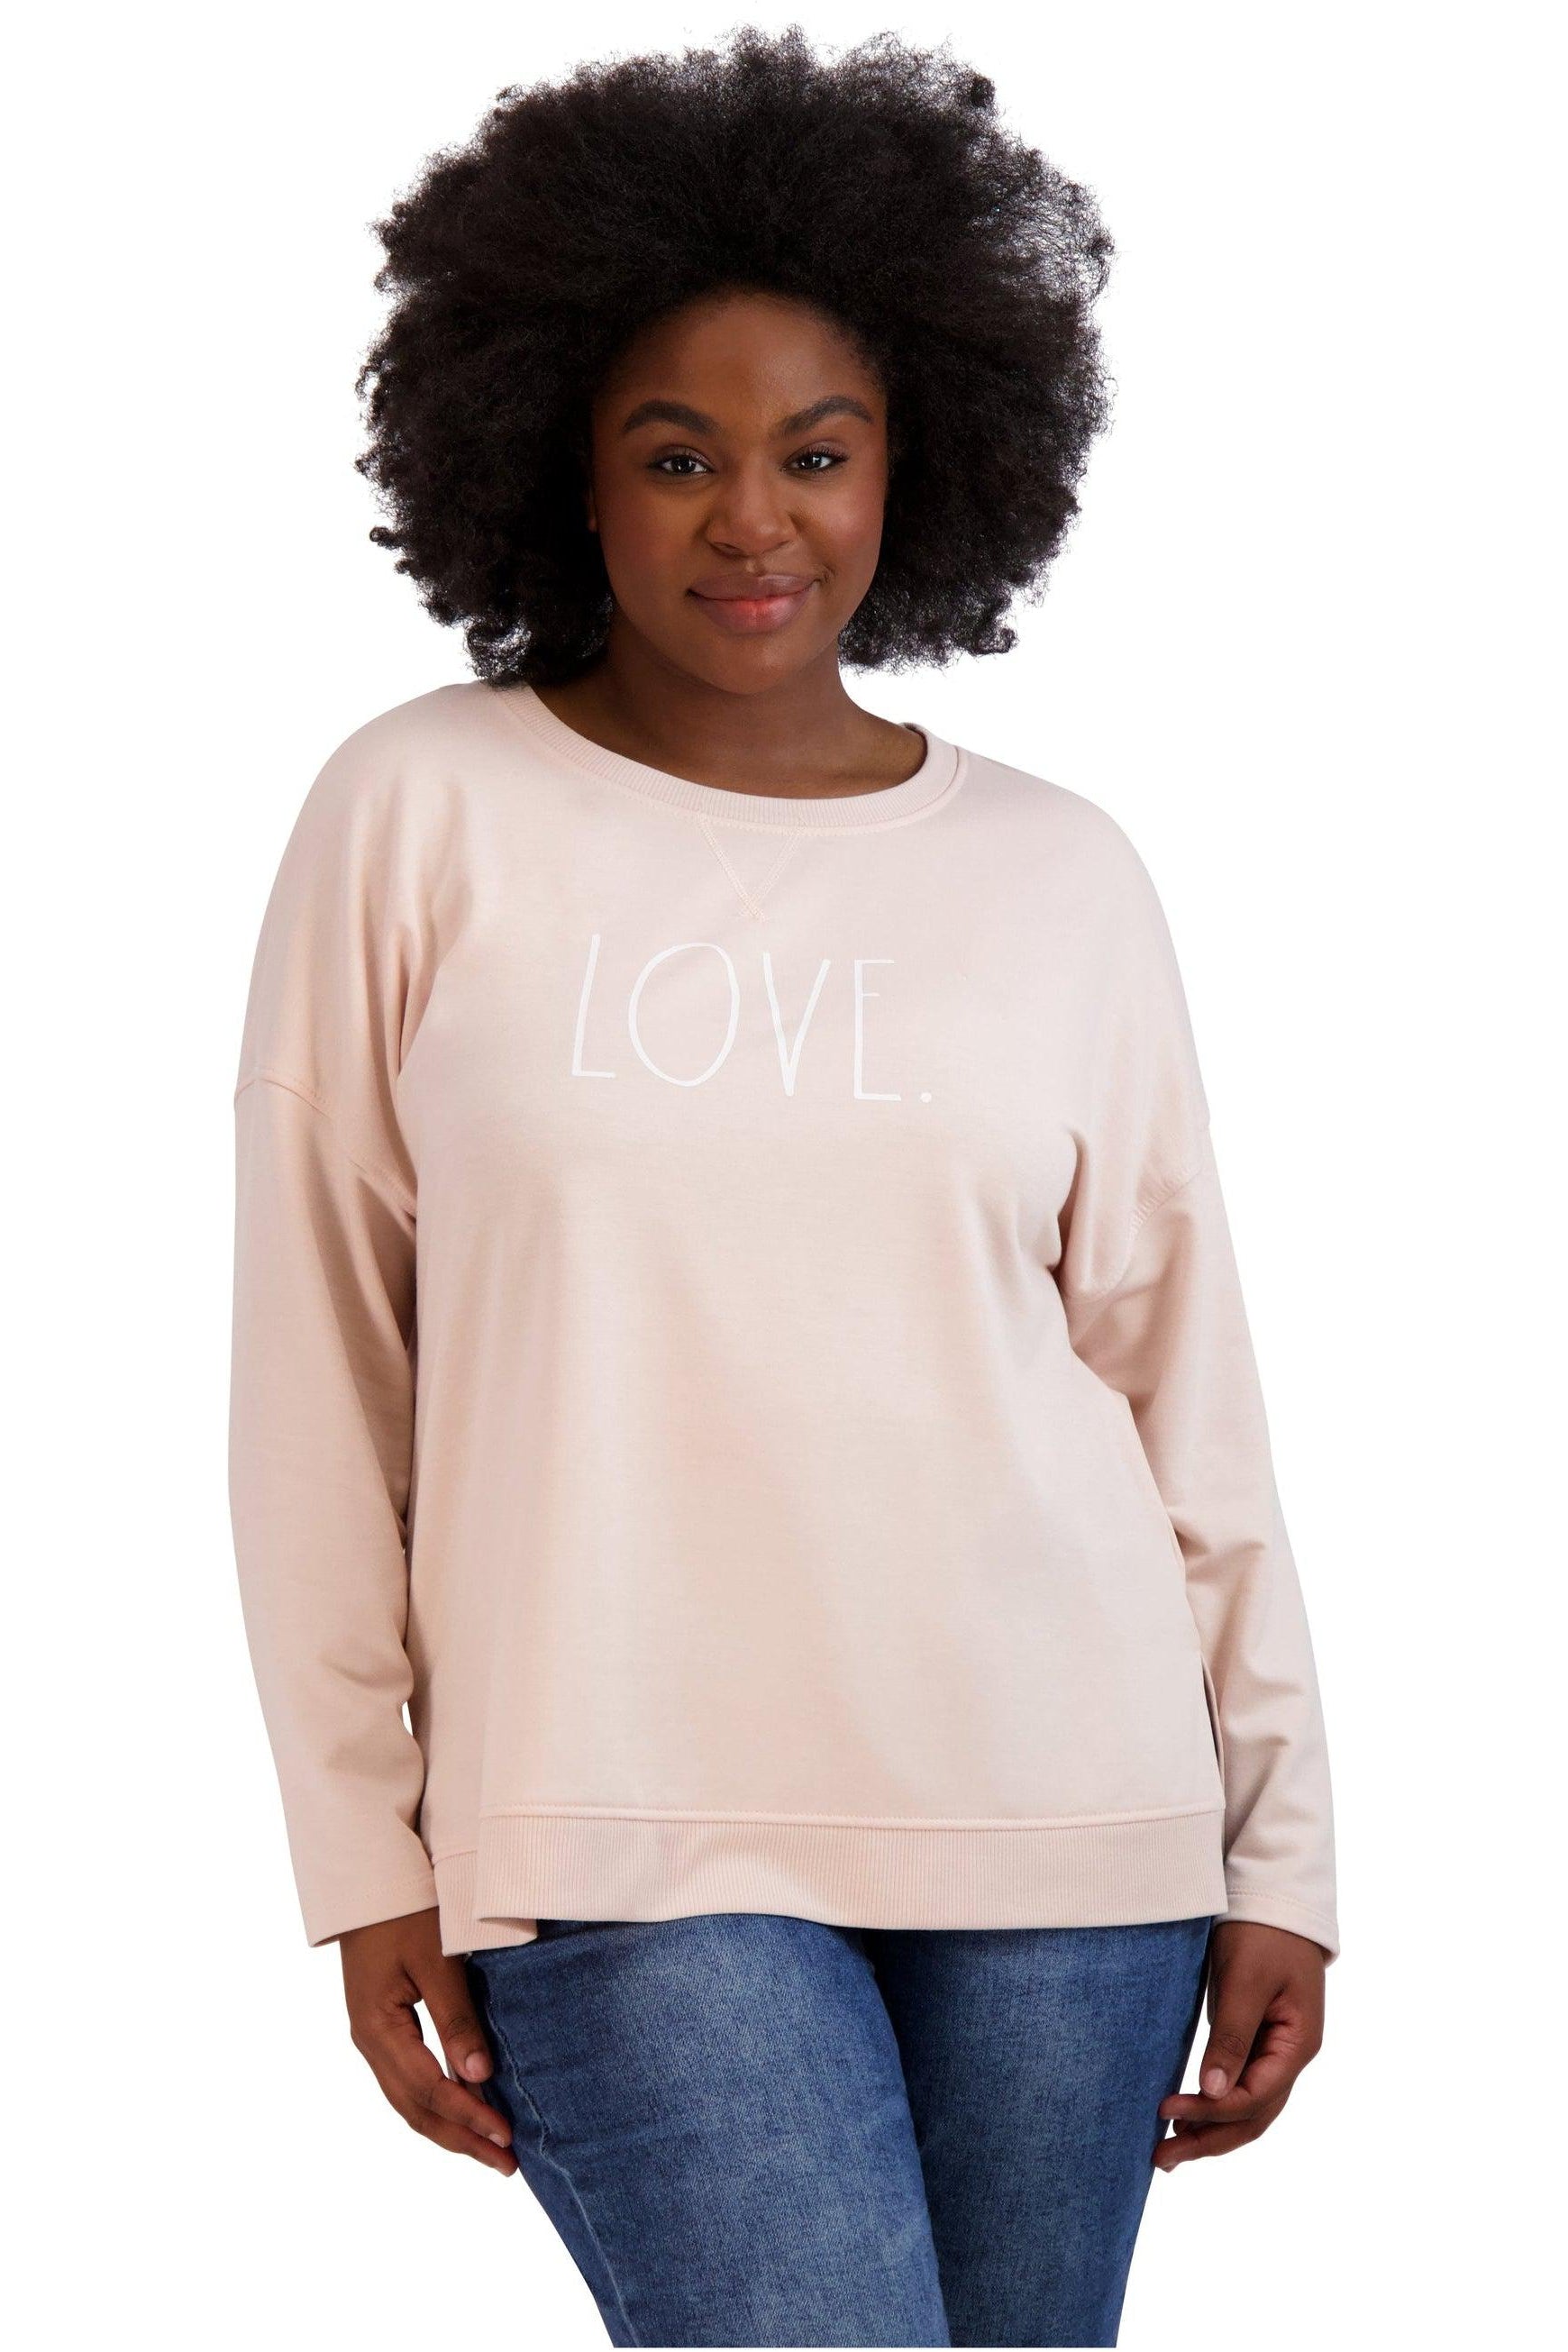 Rae Dunn Women's LOVE Plus Size High Low Pullover Sweatshirt – Rae Dunn  Wear